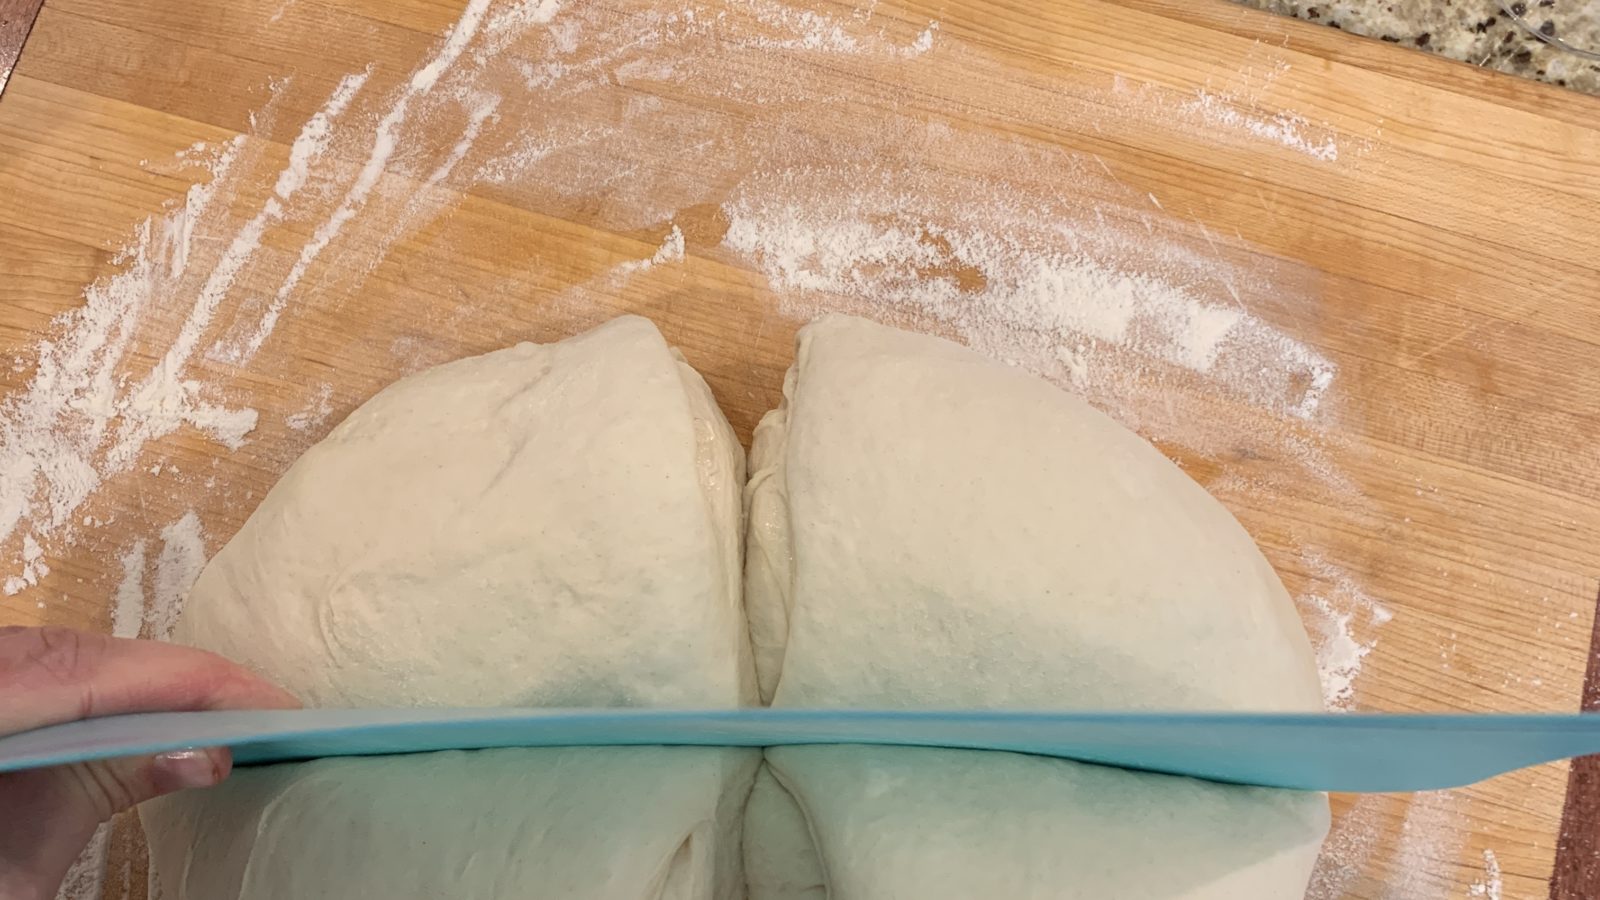 Making homemade pizza dough